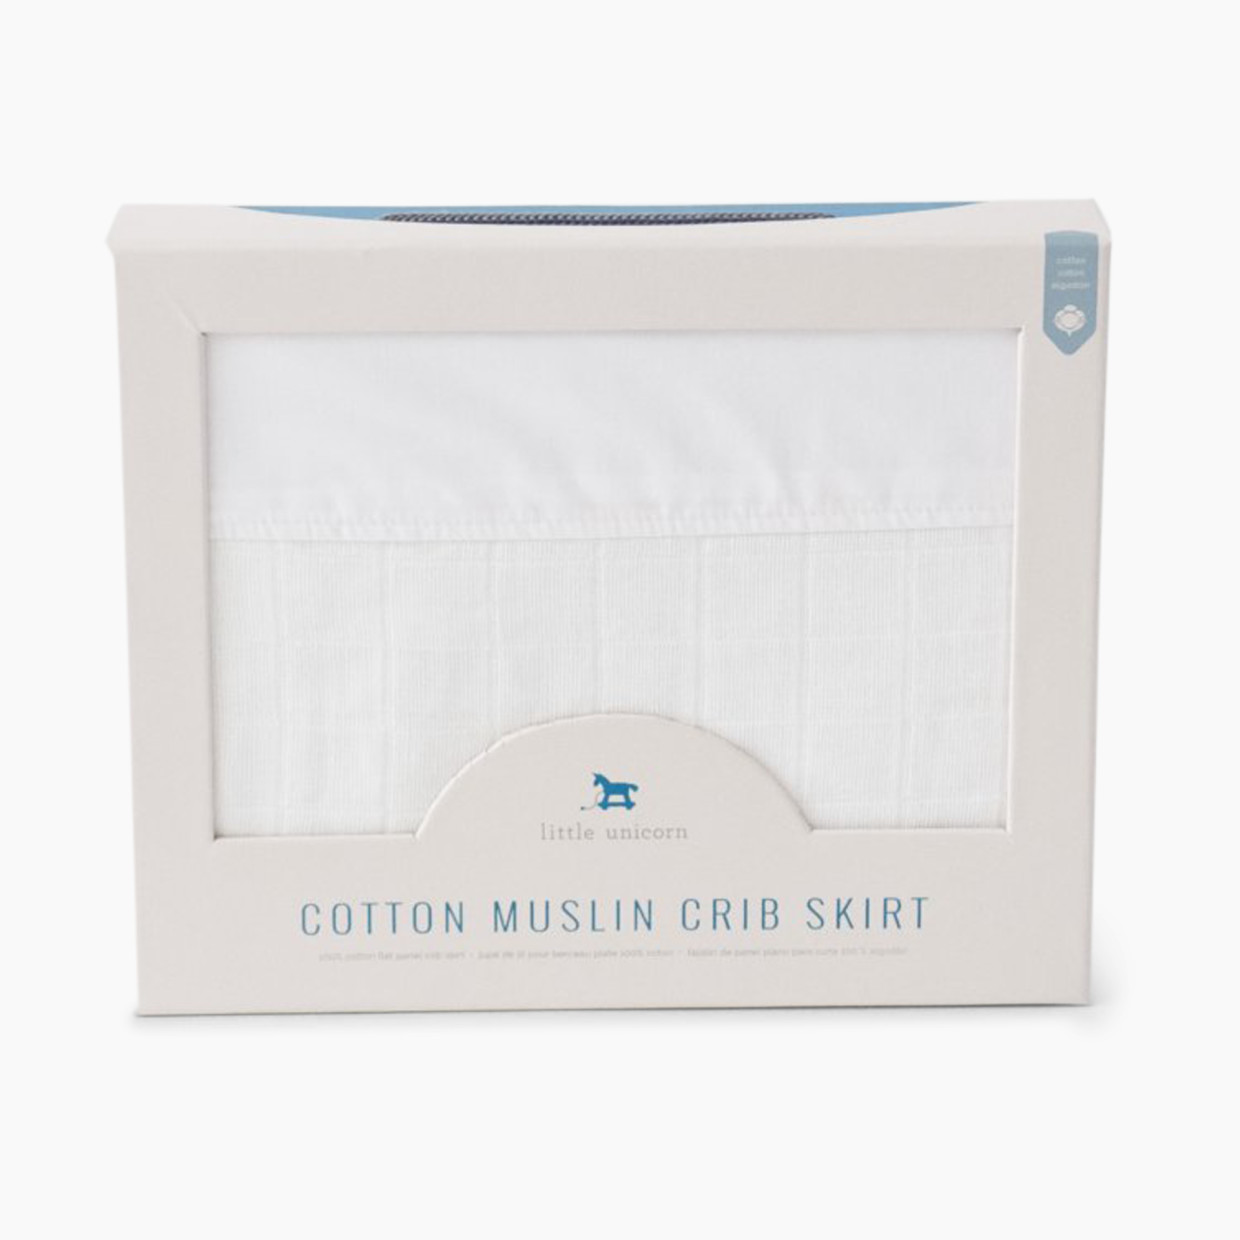 Little Unicorn Cotton Muslin Crib Skirt - White.